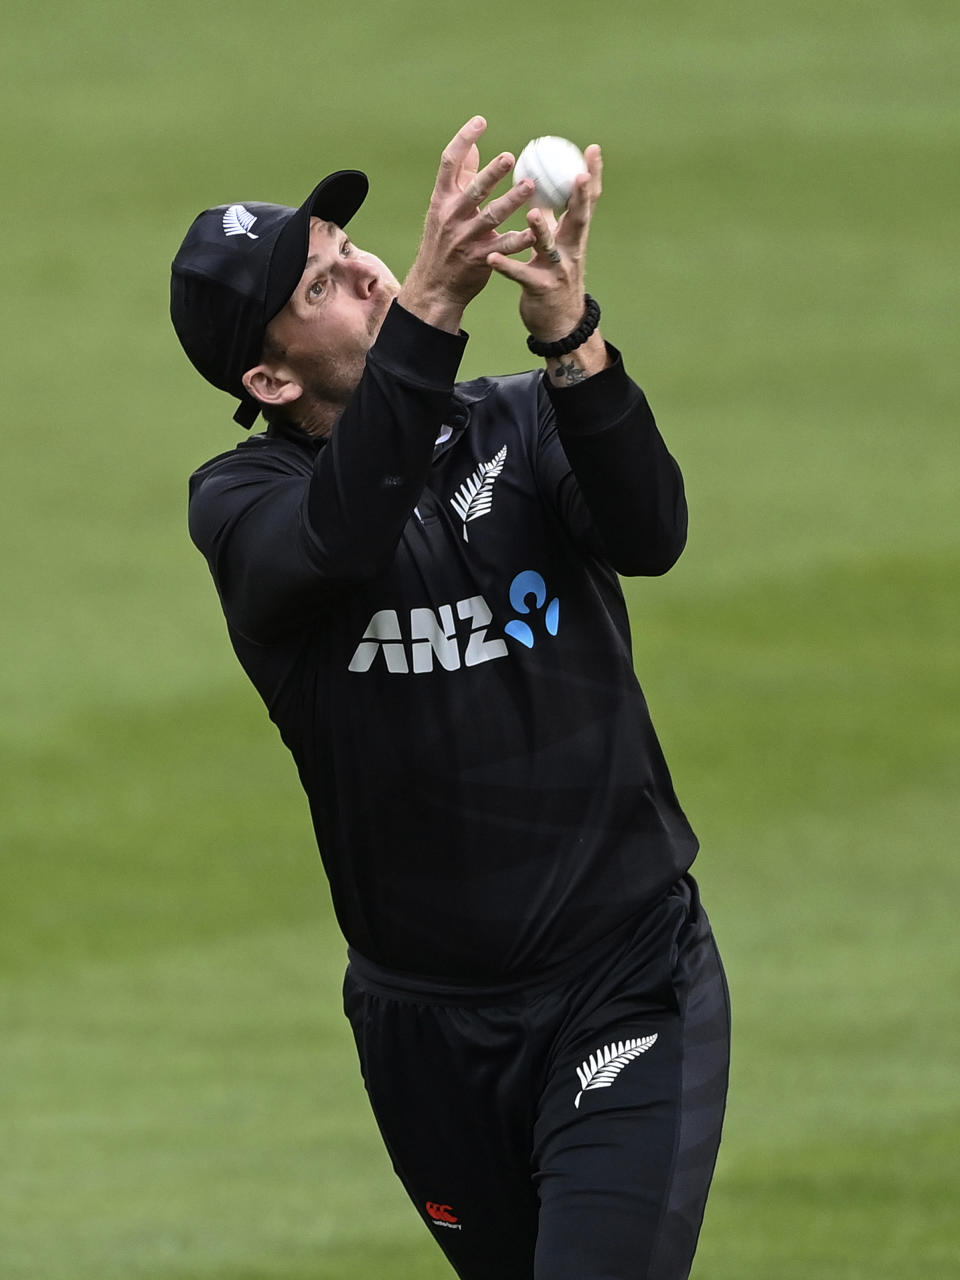 New Zealand's Lockie Ferguson takes a catch to dismiss India's Shikhar Dhawan during their one day international cricket match in Hamilton, New Zealand, Sunday, Nov. 27, 2022. (Andrew Cornaga/Photosport via AP)